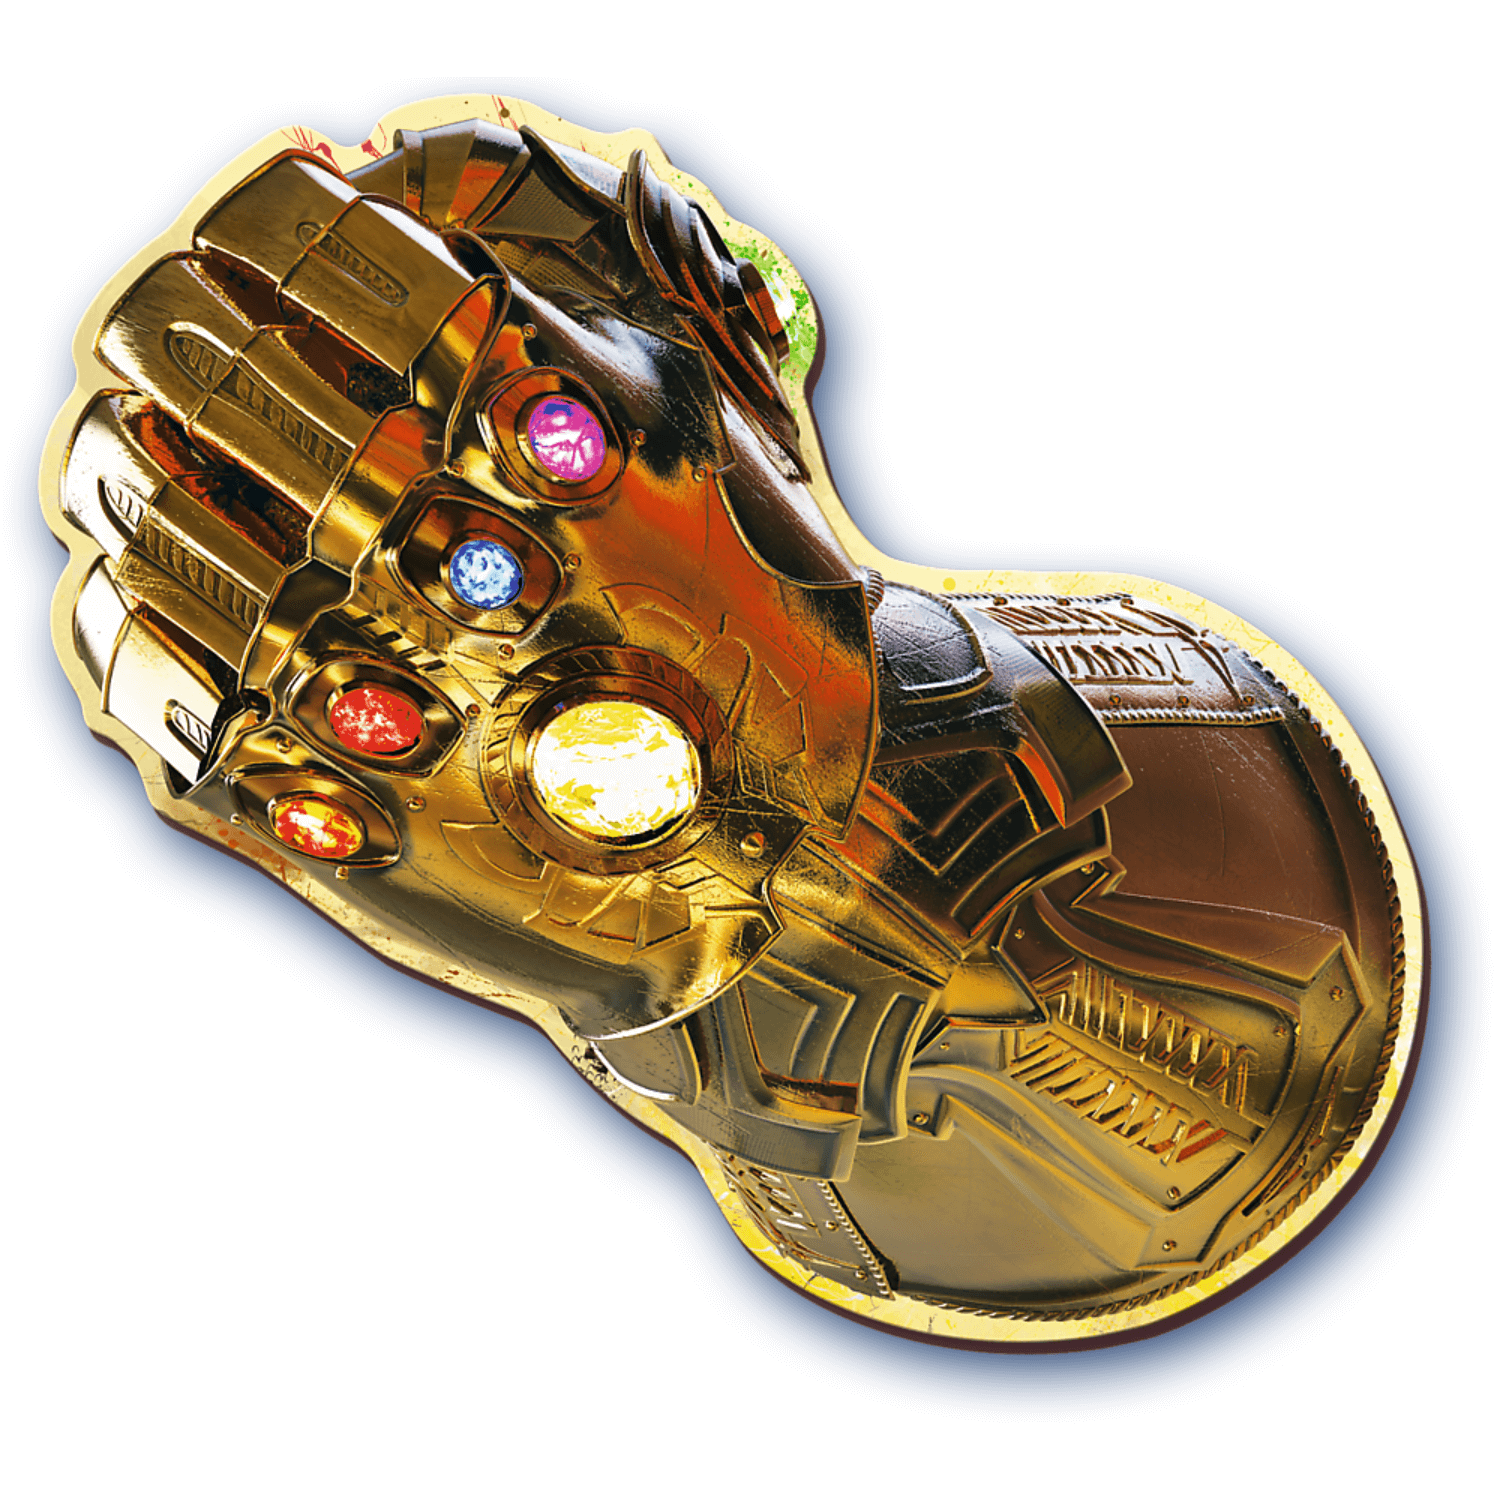 MARVEL Avenger Thanos Infinity Handschuh | Holz Puzzle 505-Holzpuzzle-TREFL--